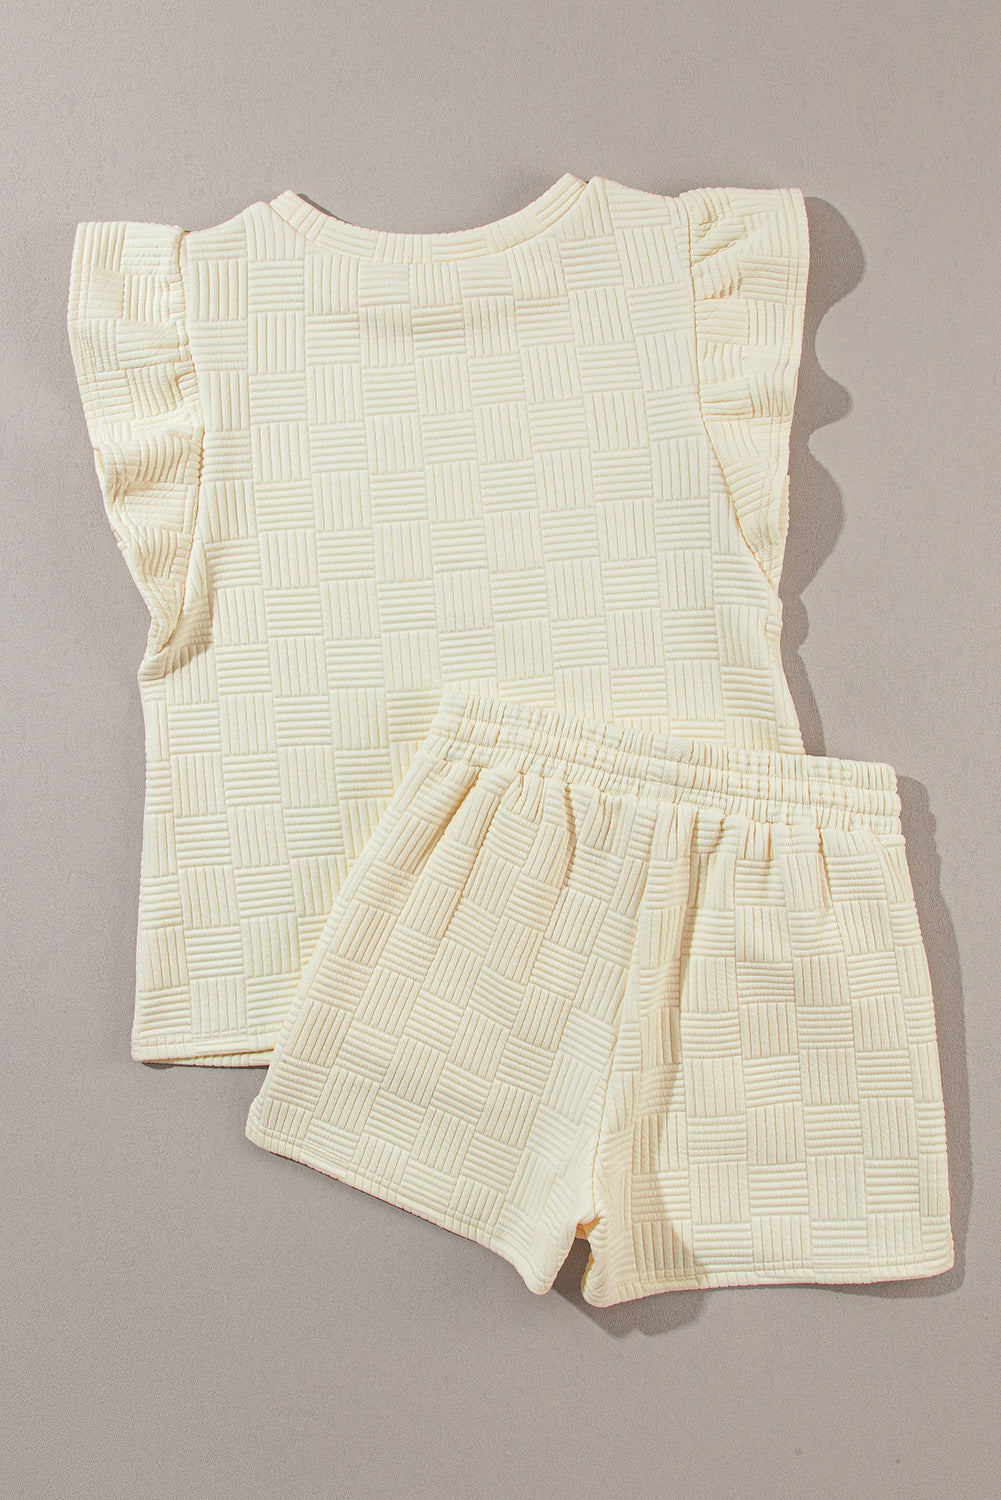 Apricot Textured Ruffled Sleeve Tee and Drawstring Shorts Set